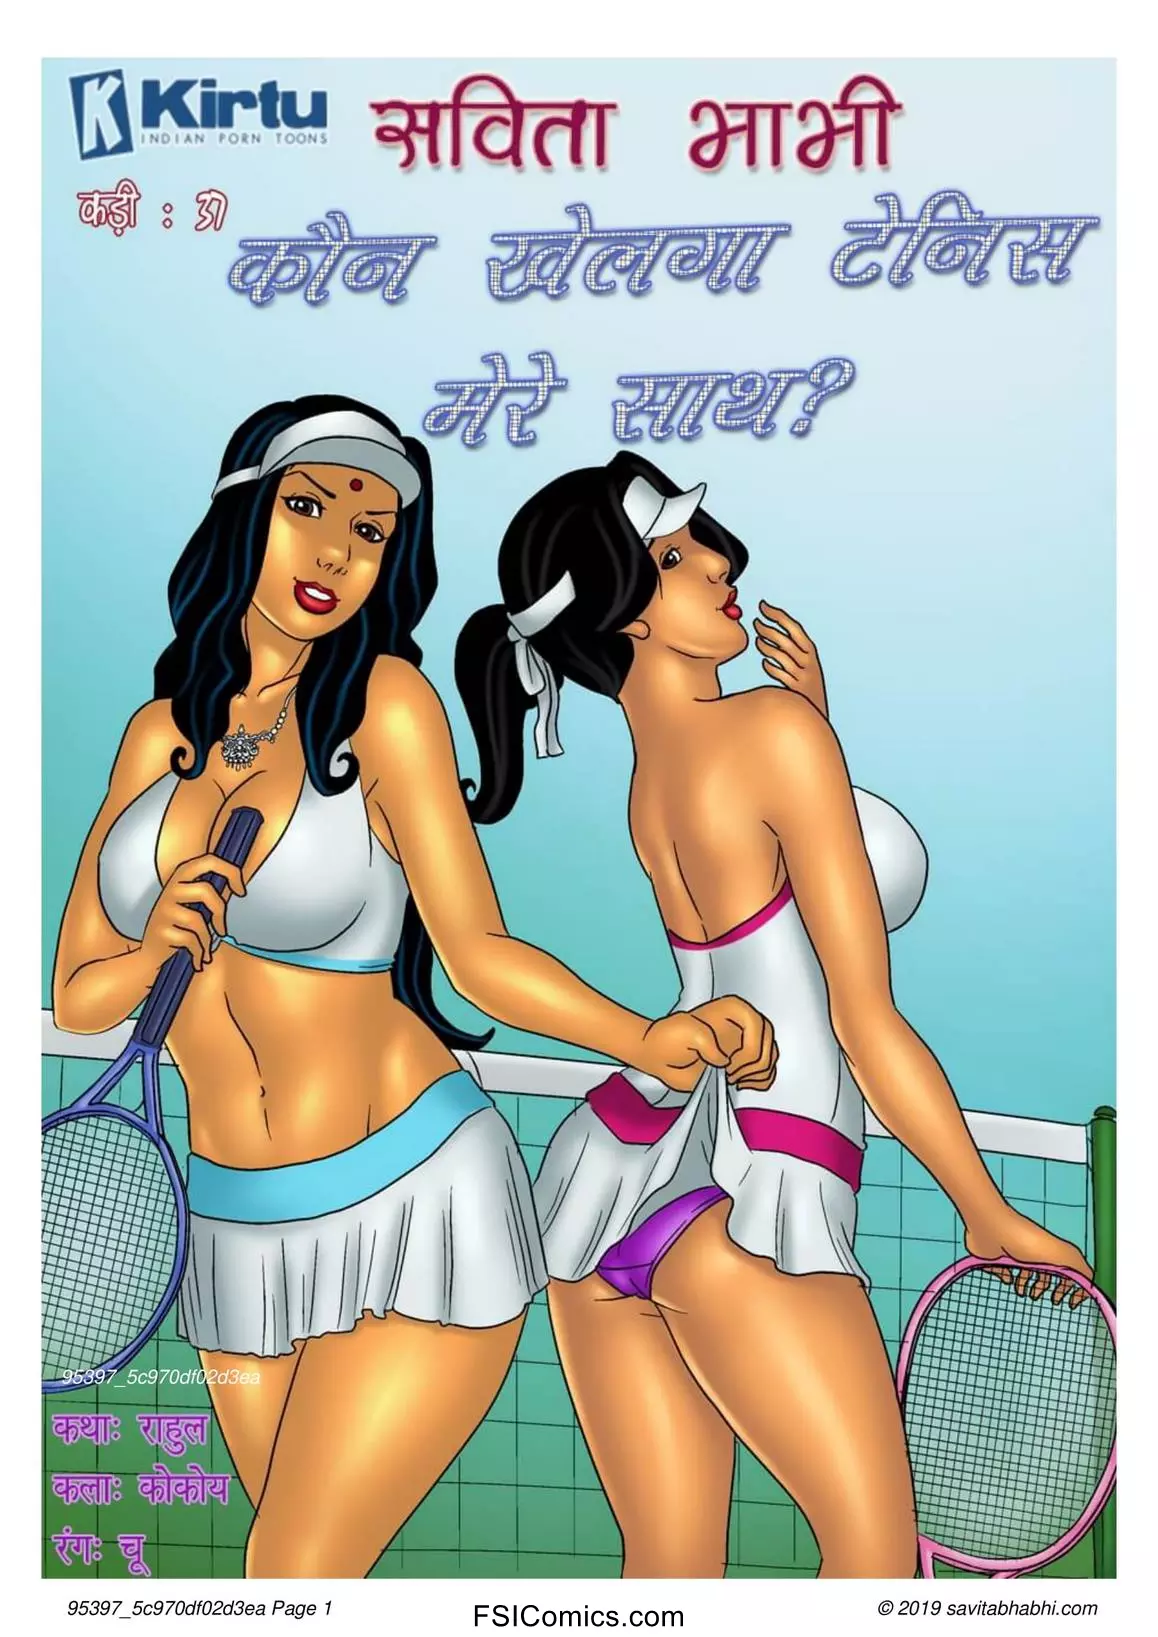 Savita Bhabhi Episode 37 Hindi – Kaun Khelega Tennis Mere Sath ? (कौन खेलेगा टेनिस मेरे साथ?) - 11 - FSIComics